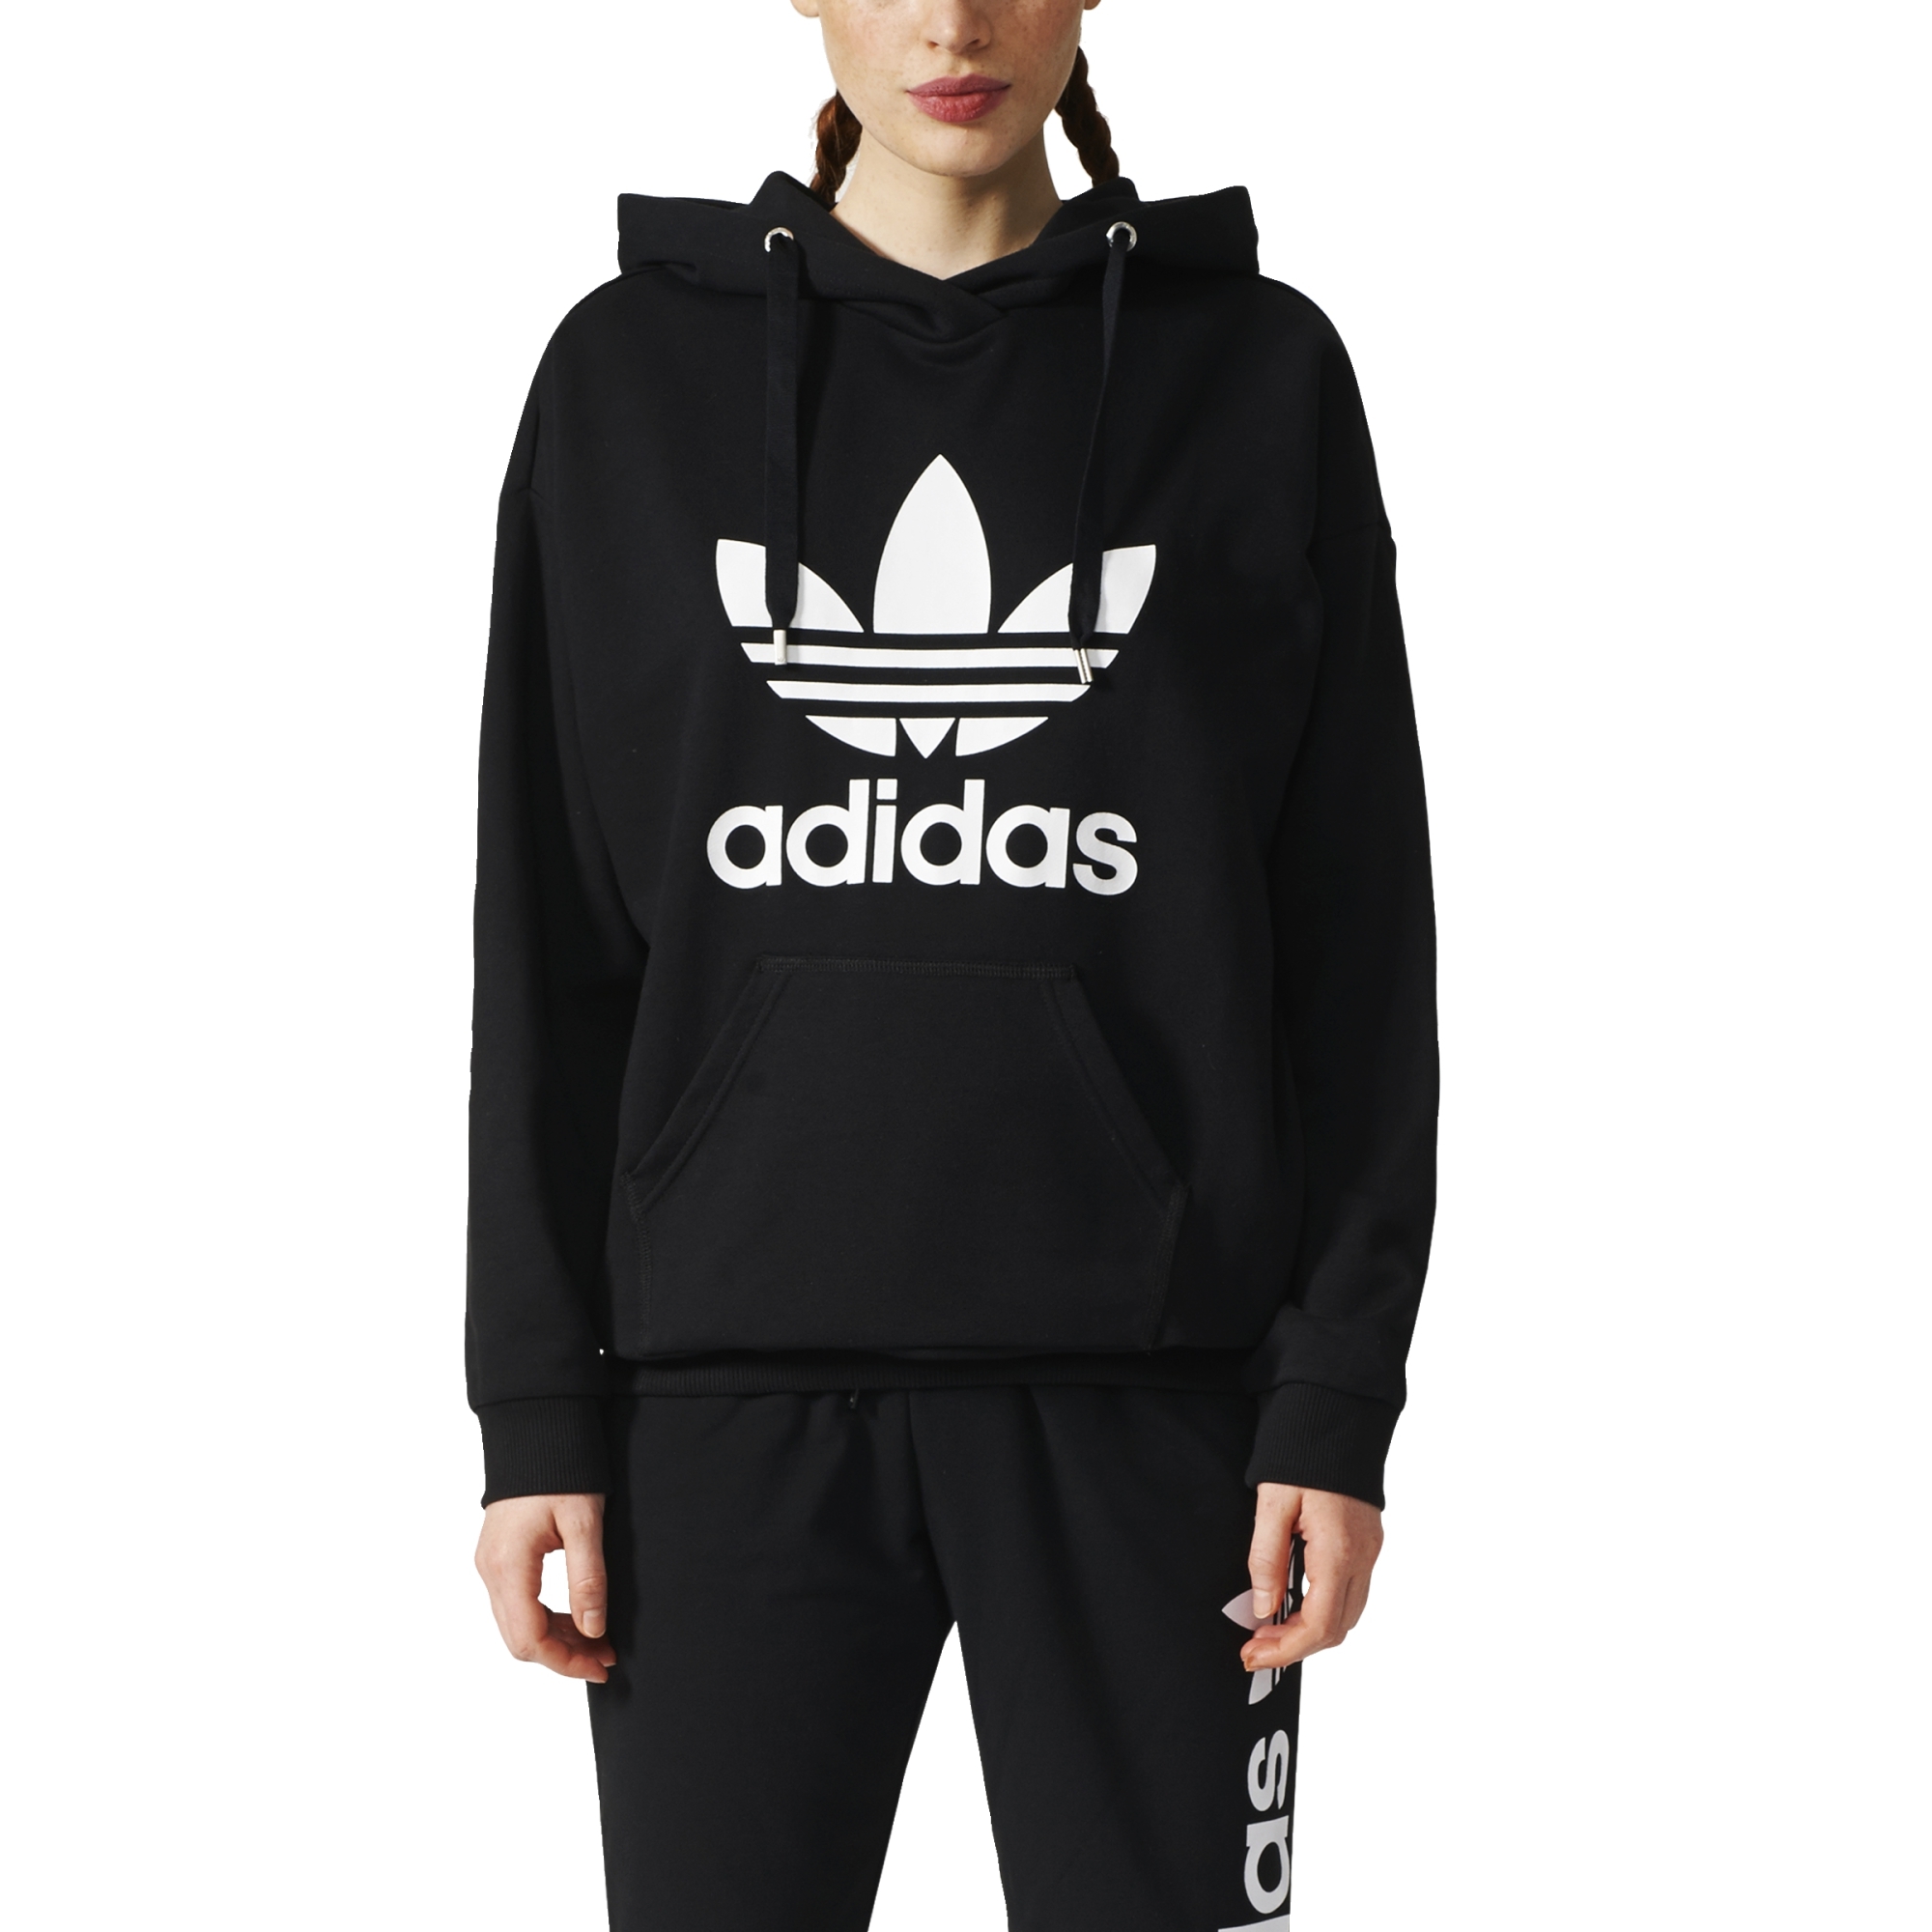 Adidas Originals Trefoil Hoodie W (black/white)